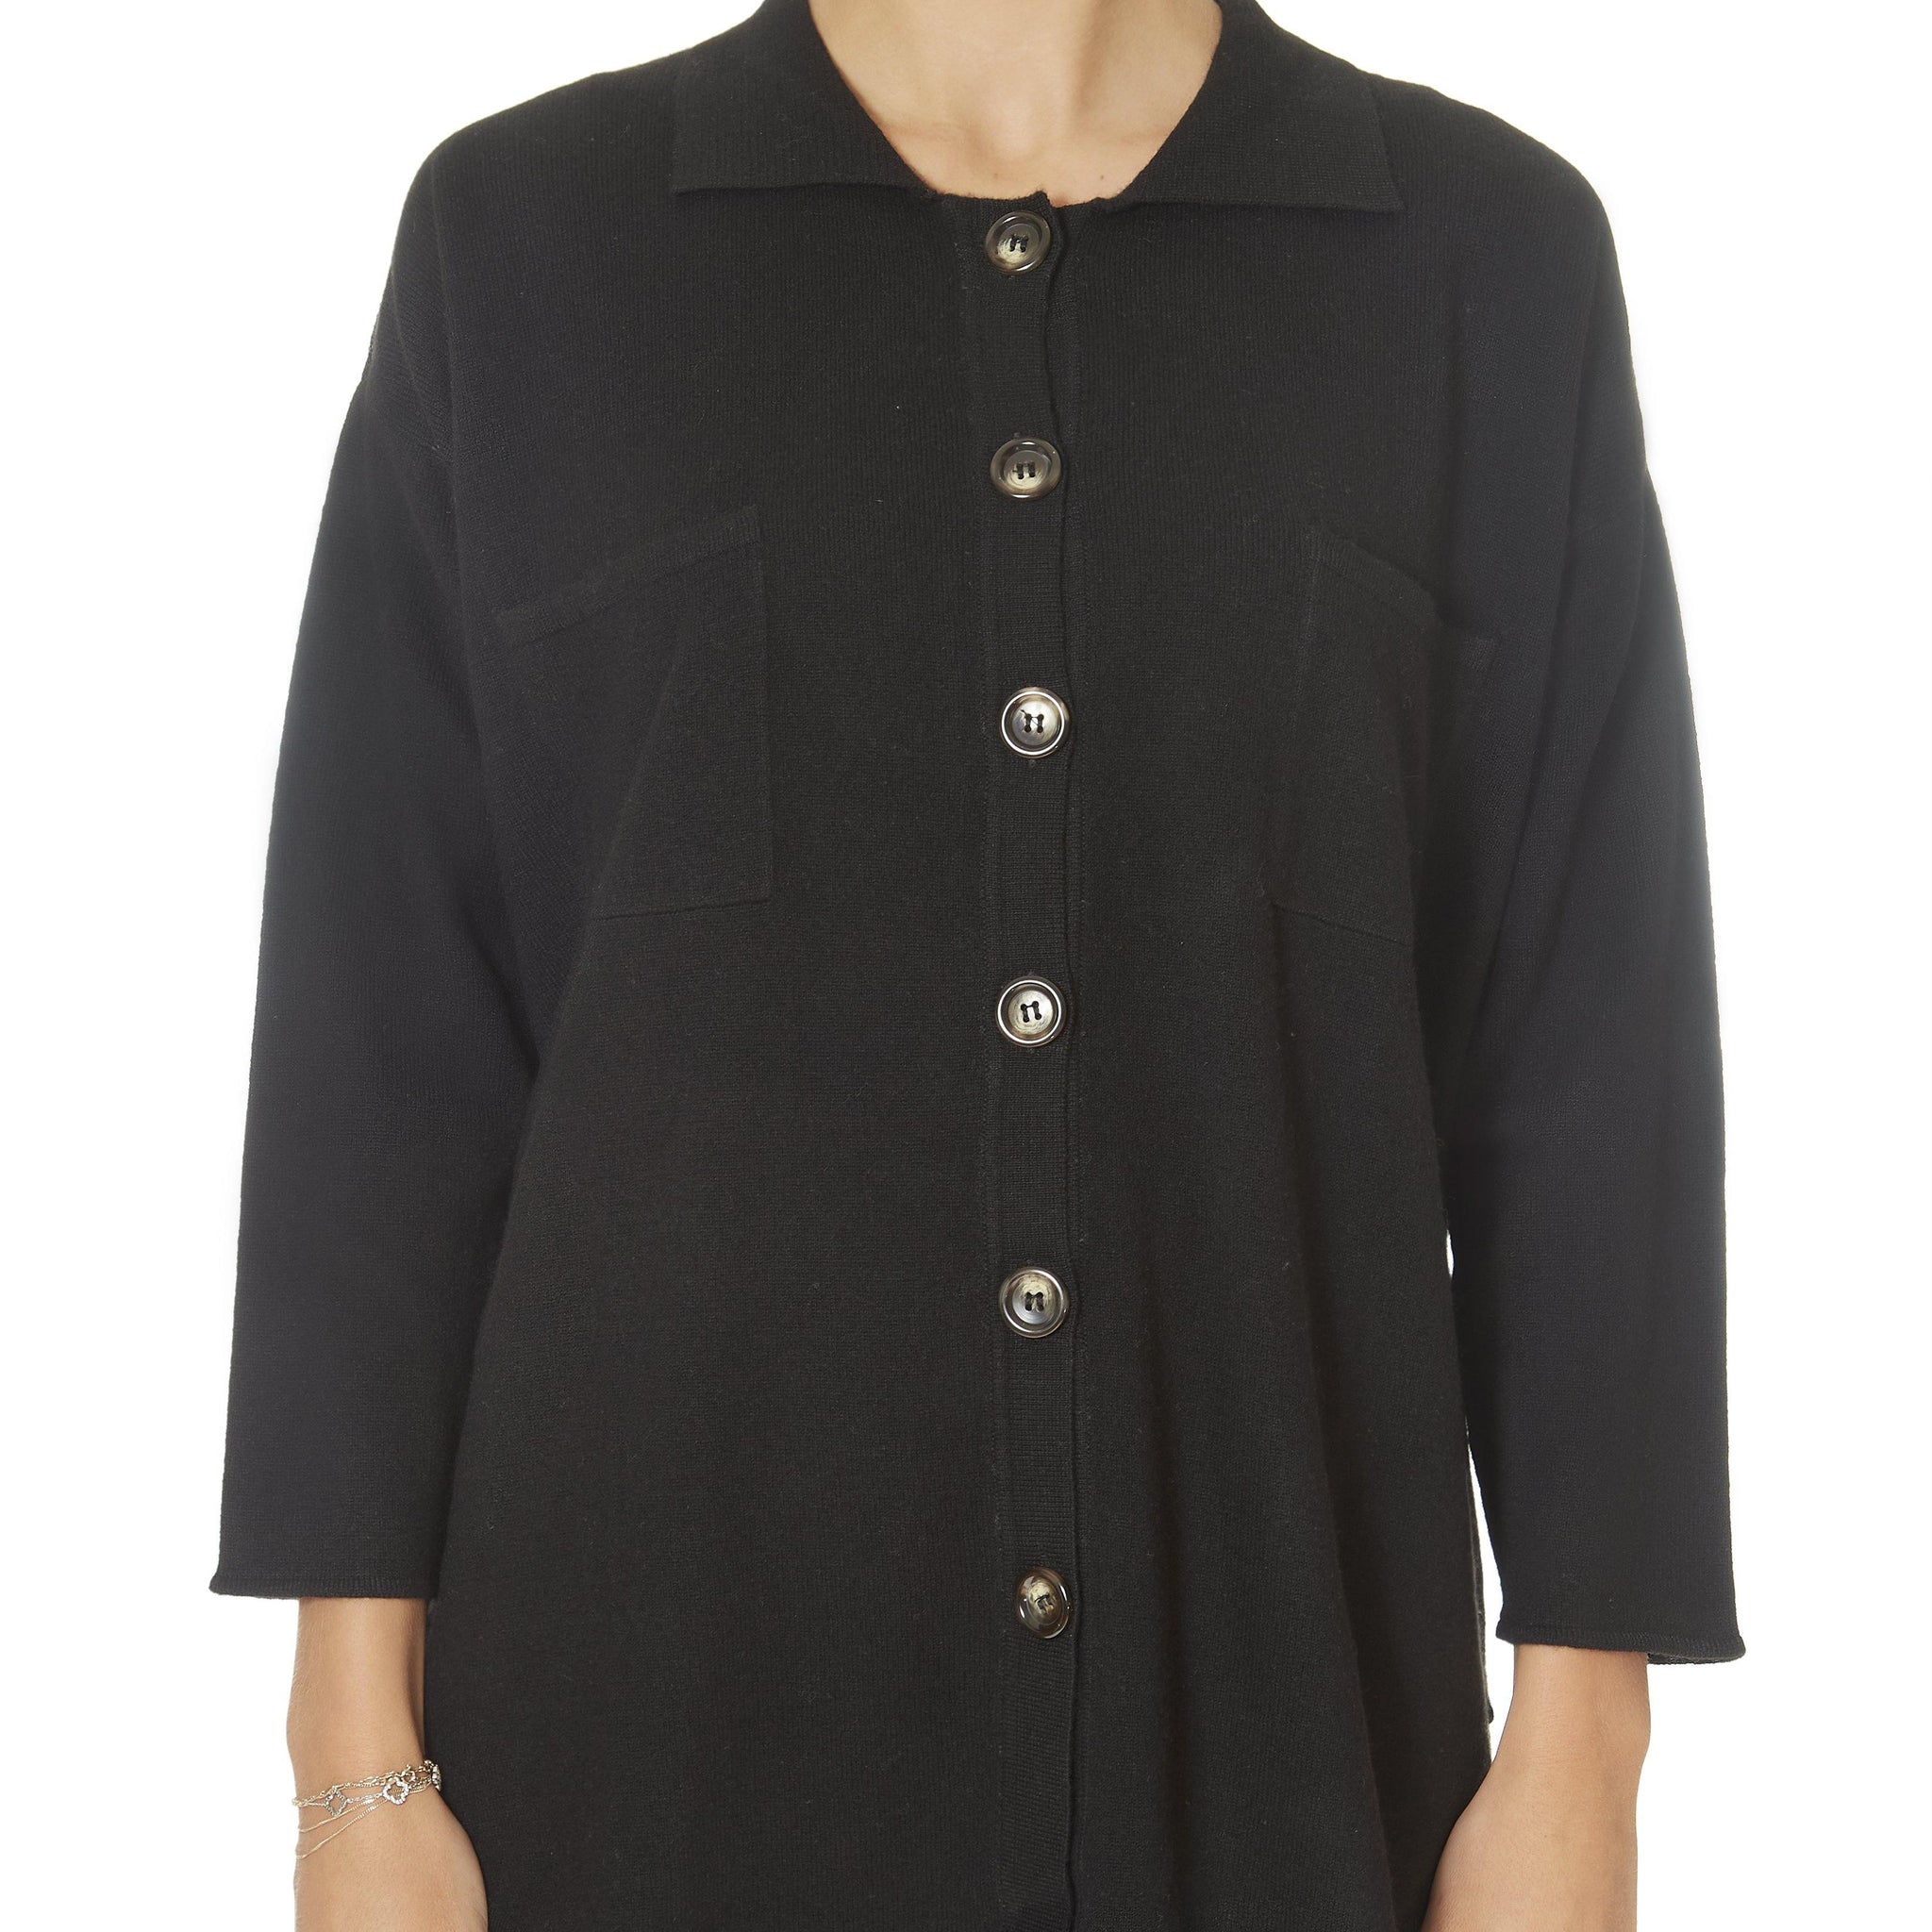 Jessimara Knitwear Tammy 'Black Overshirt' - Jessimara